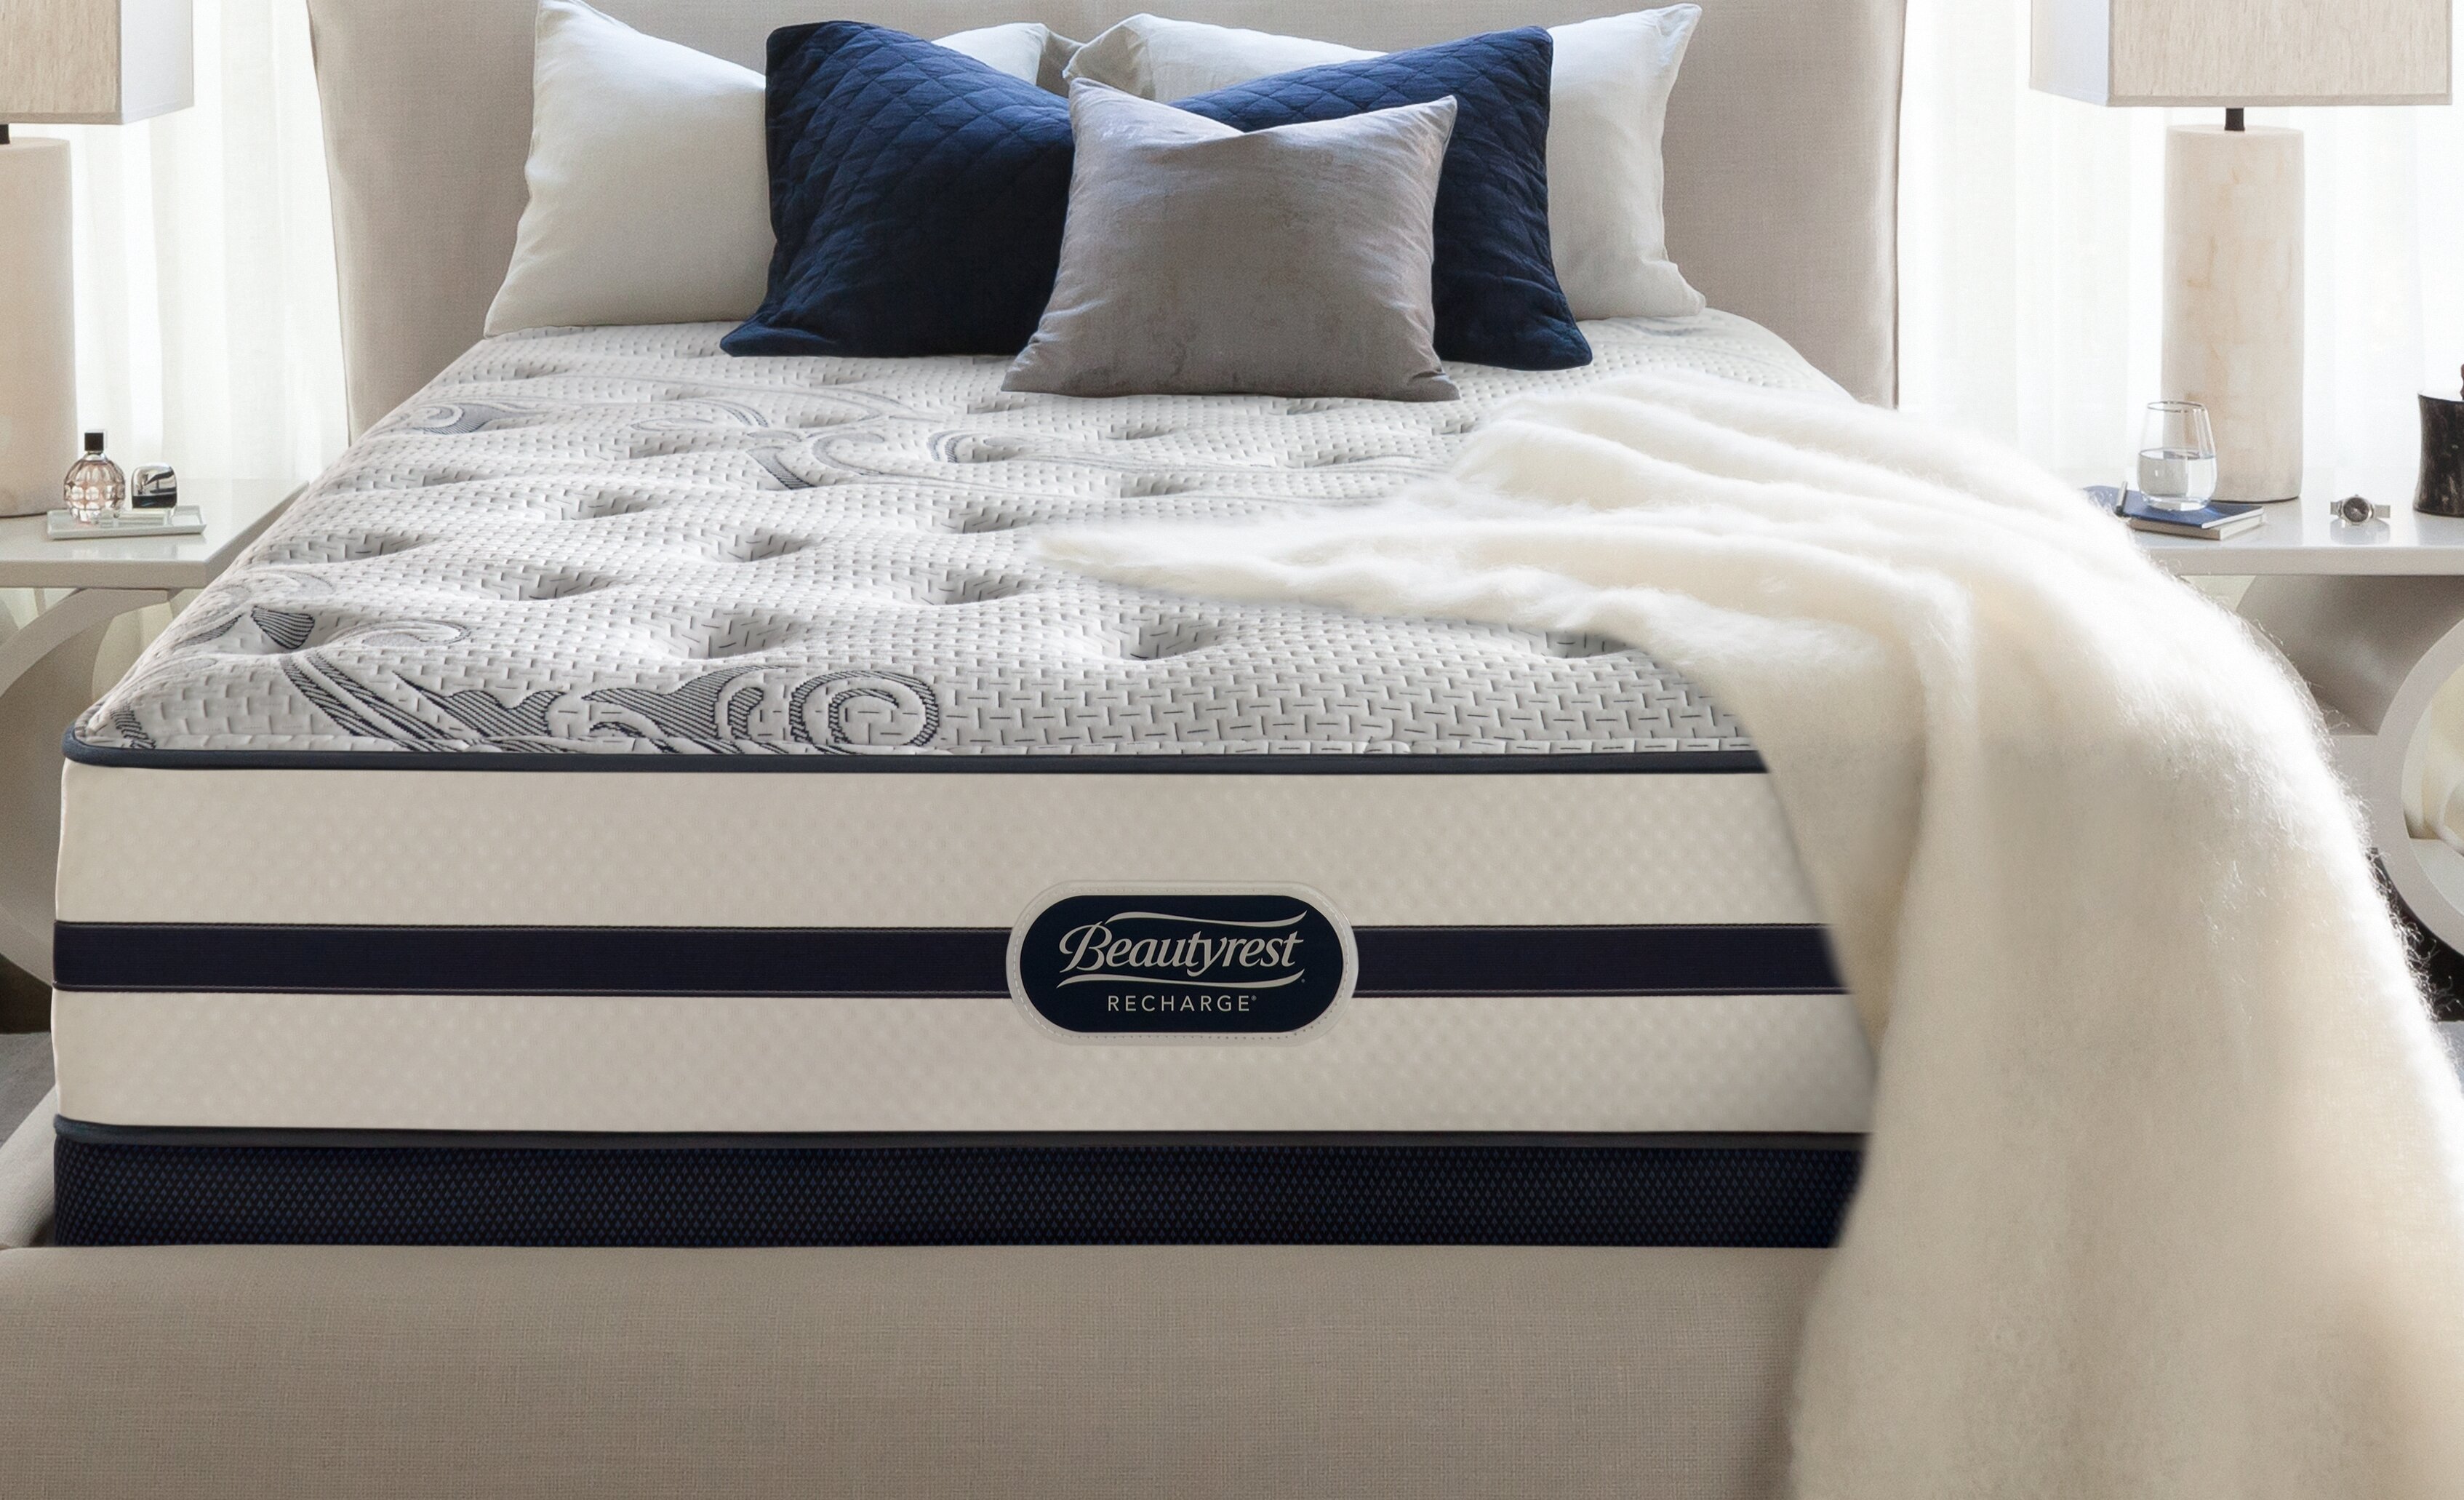 beautyrest recharge mattress protector